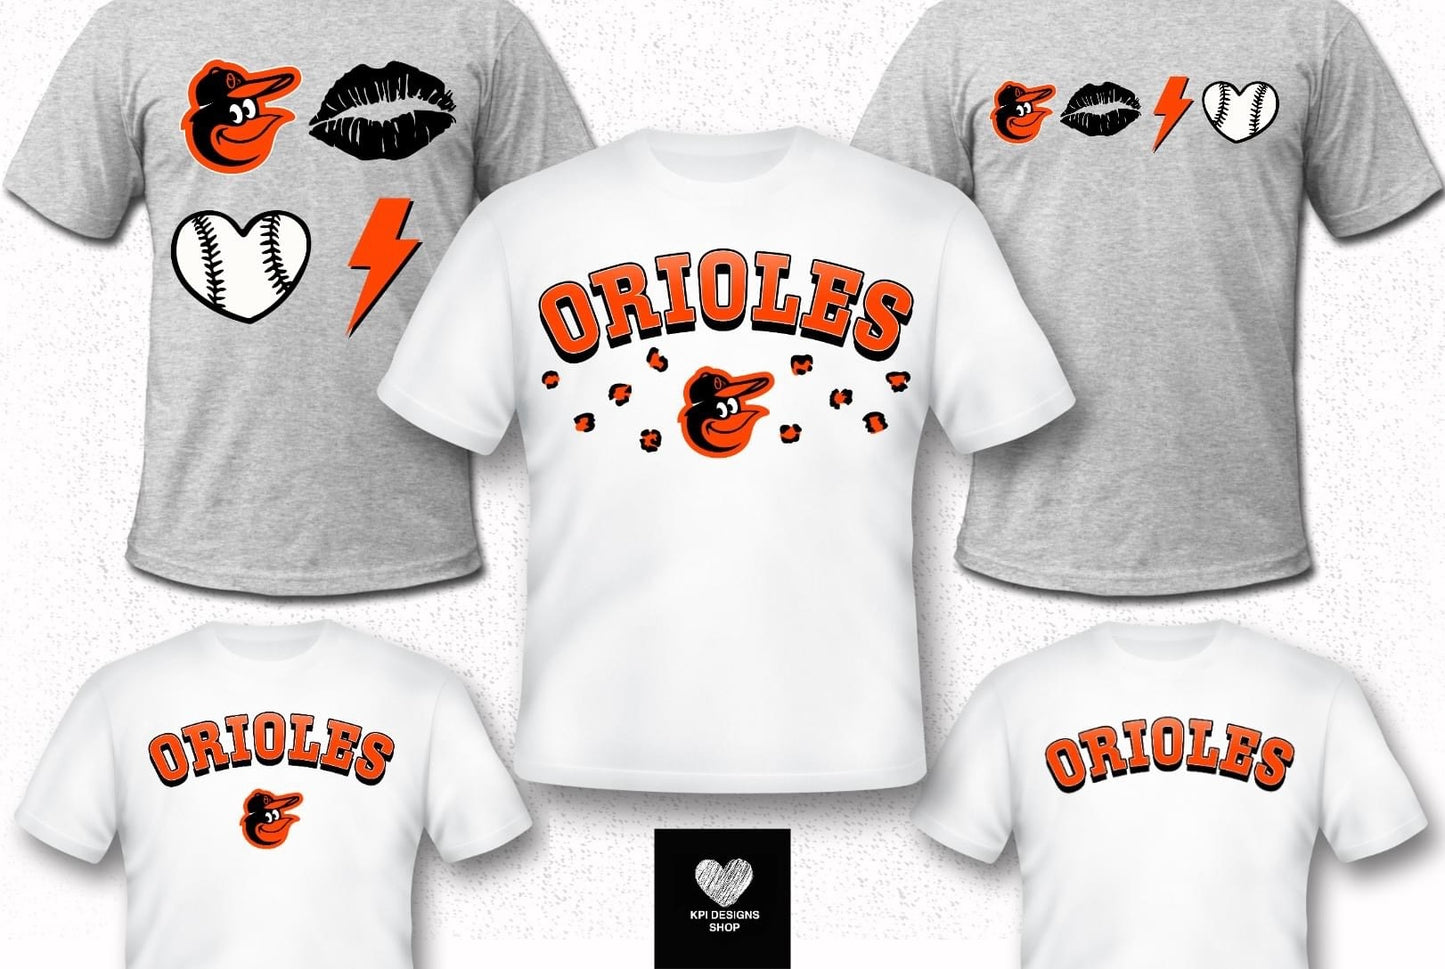 Orioles MLB Collection (KPI): *DTF* Transfer